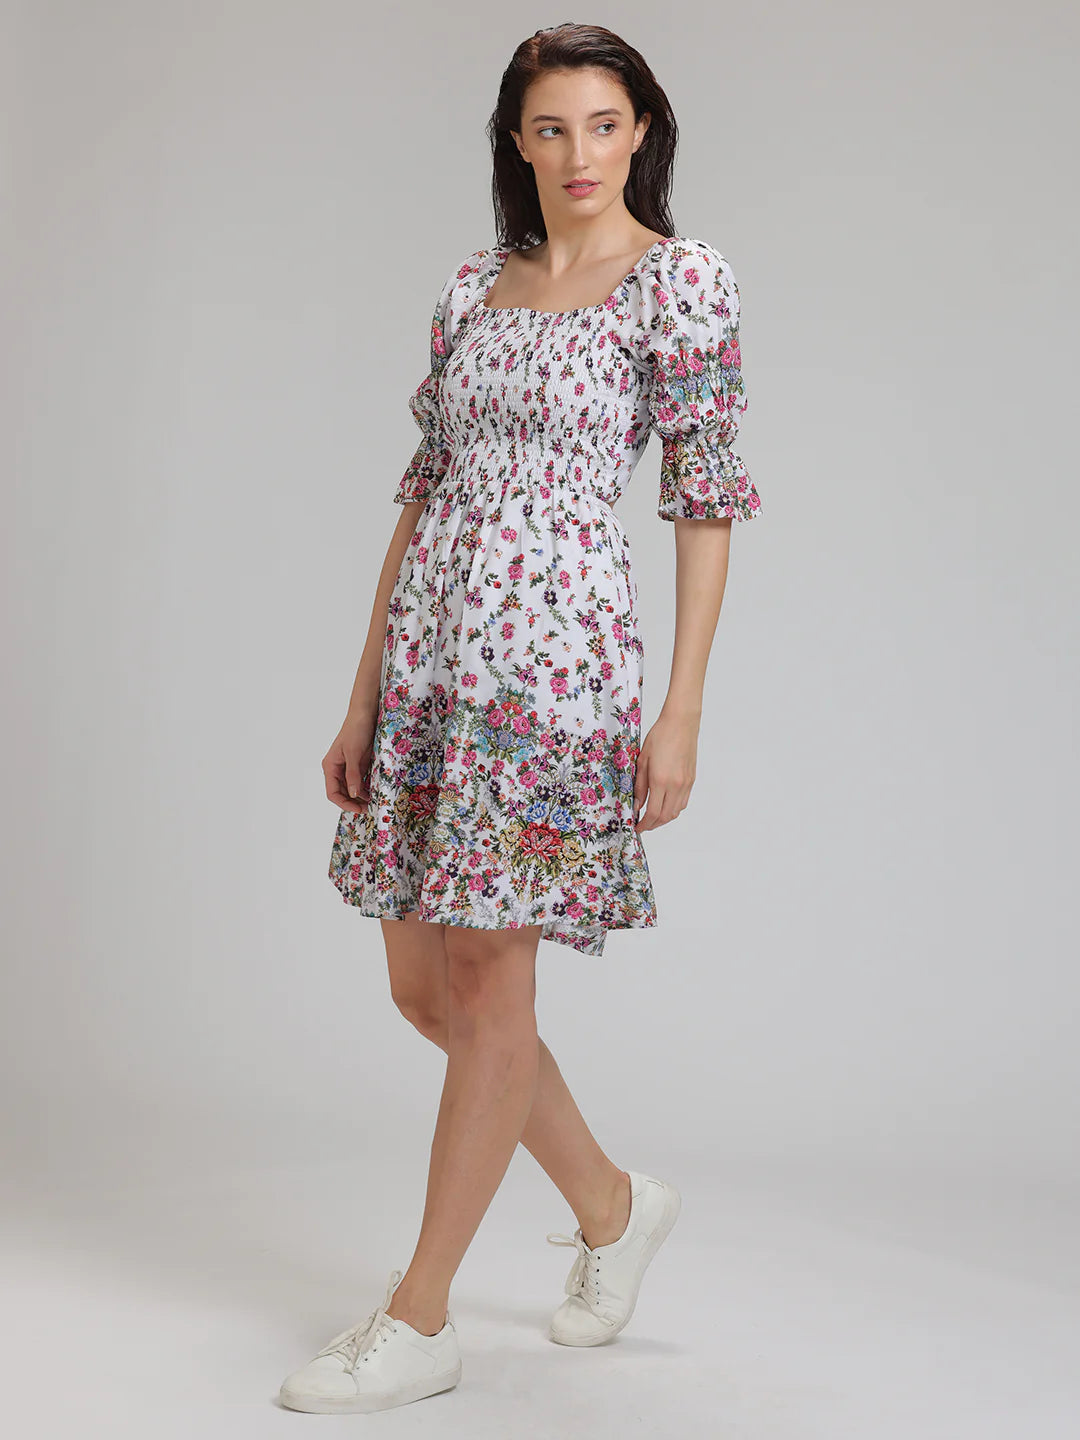 Sleeve Cutout Dress for Women | Puff Sleeve Cutout Charm Dress